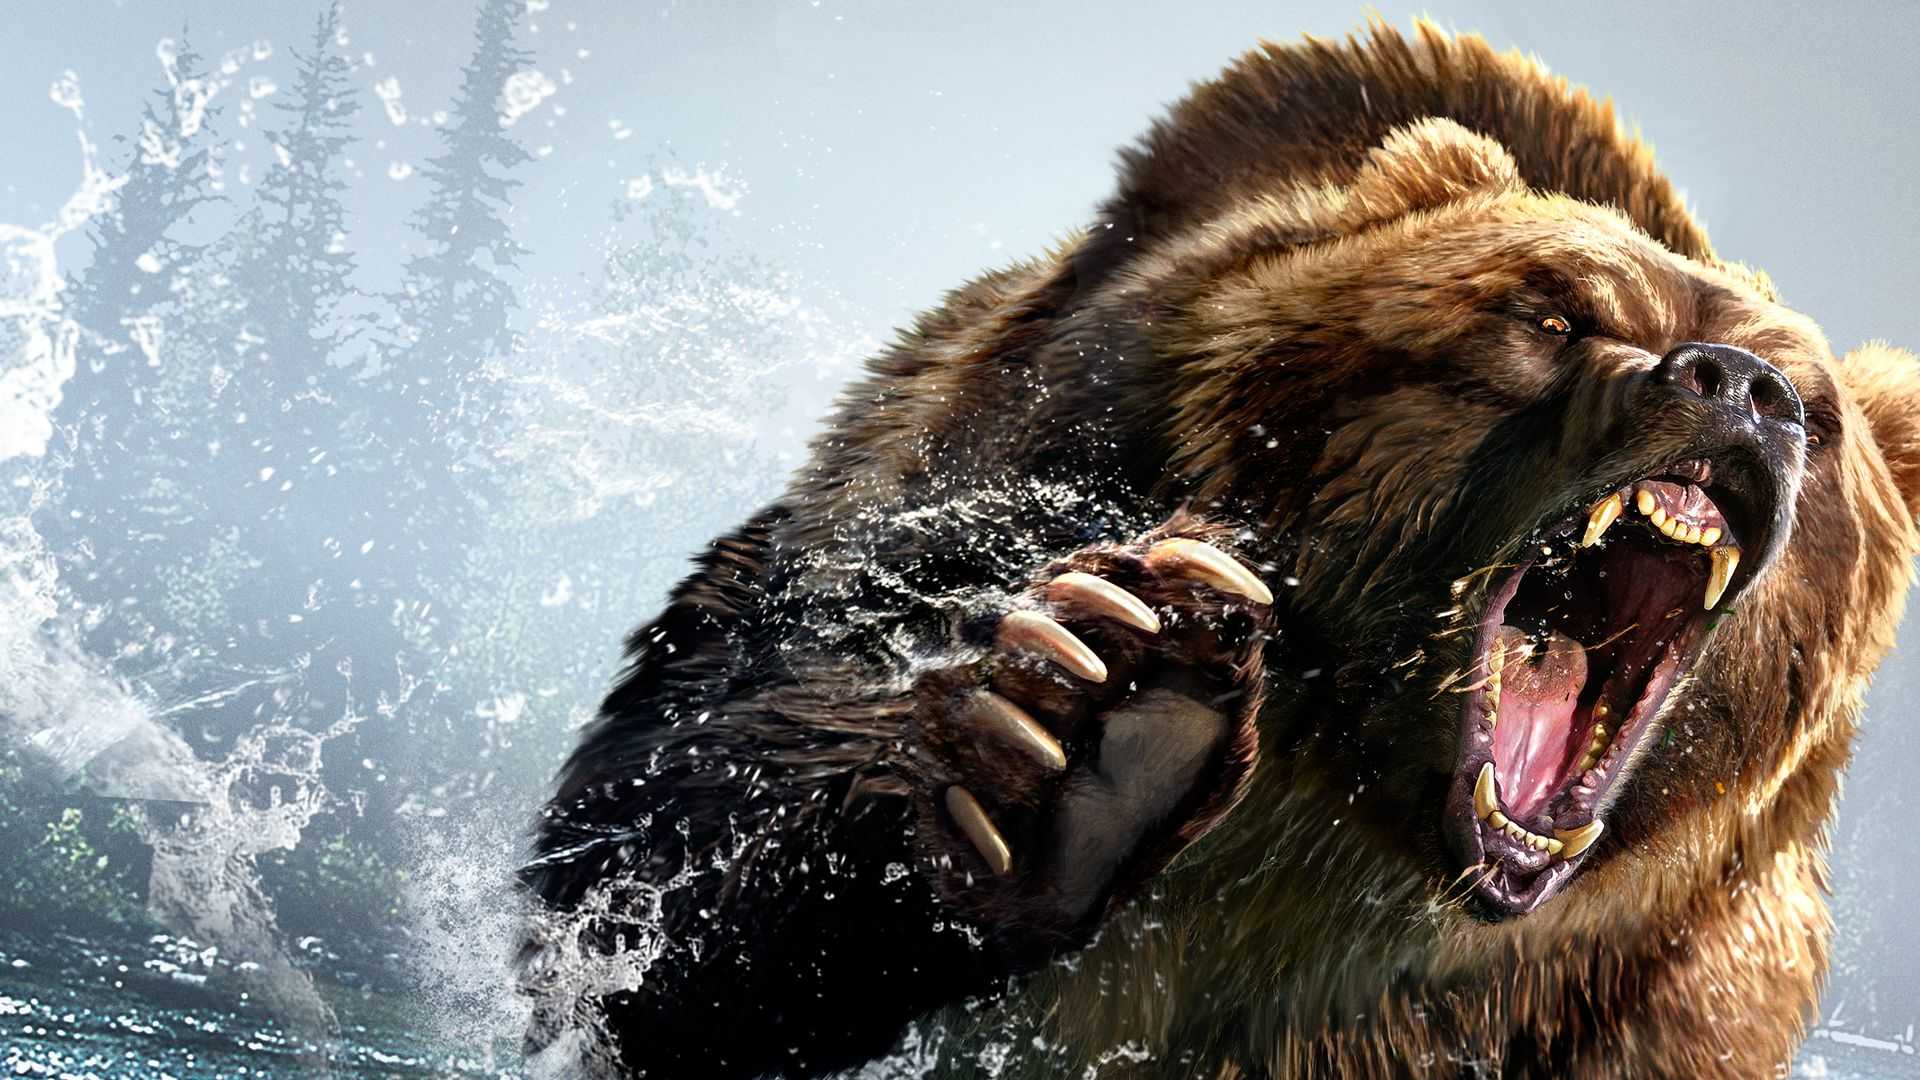 Бурый медведь оскал фото